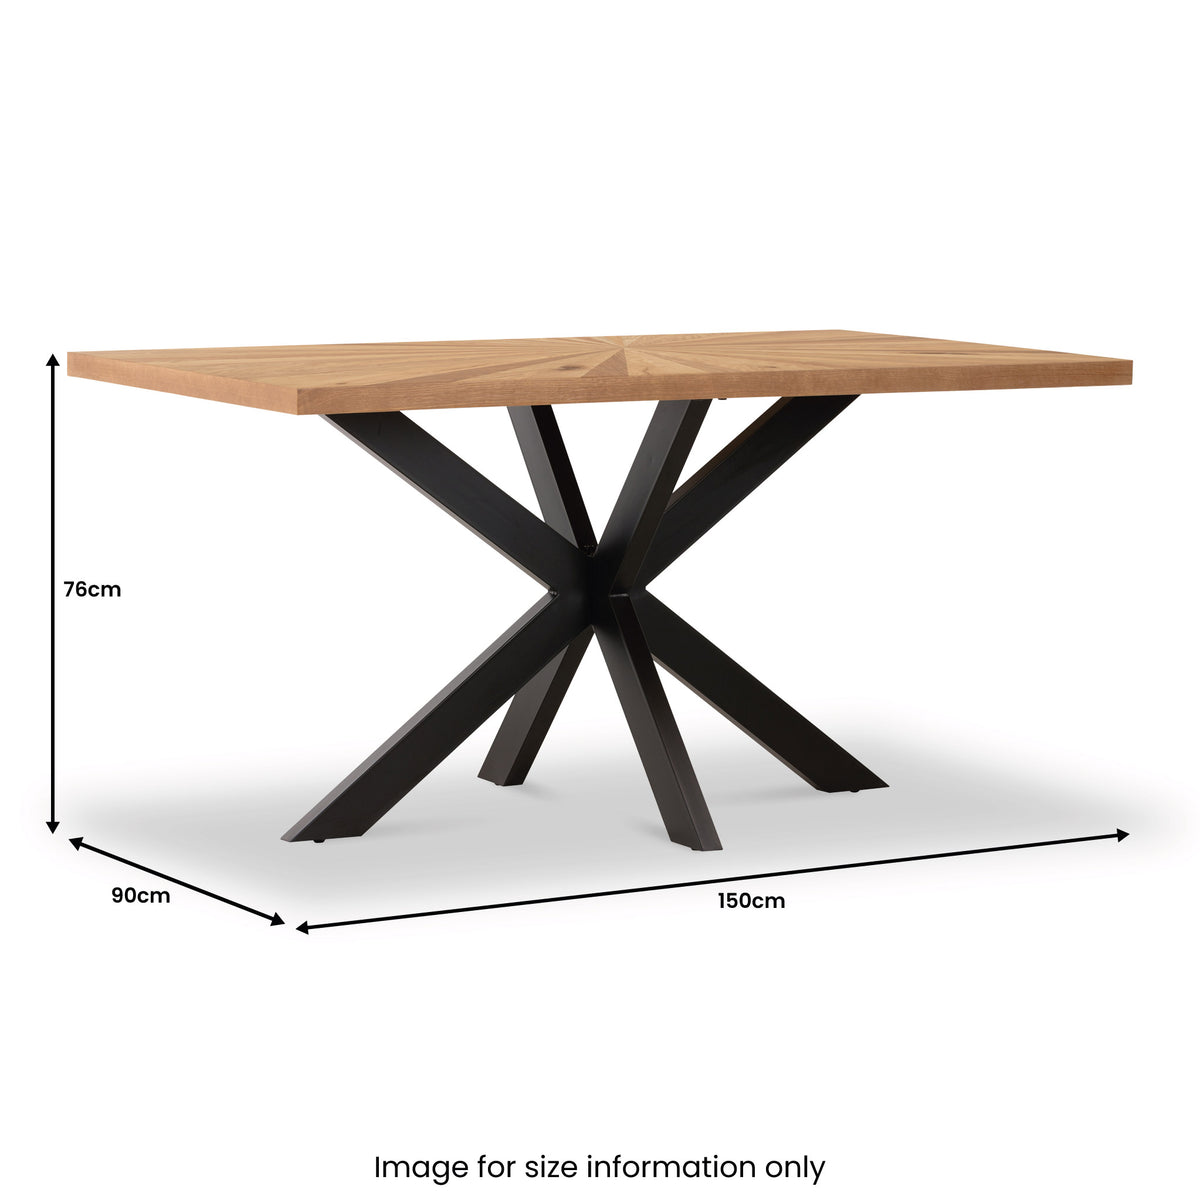 Sunburst Oak 150cm Rectangular Dining Table dimensions